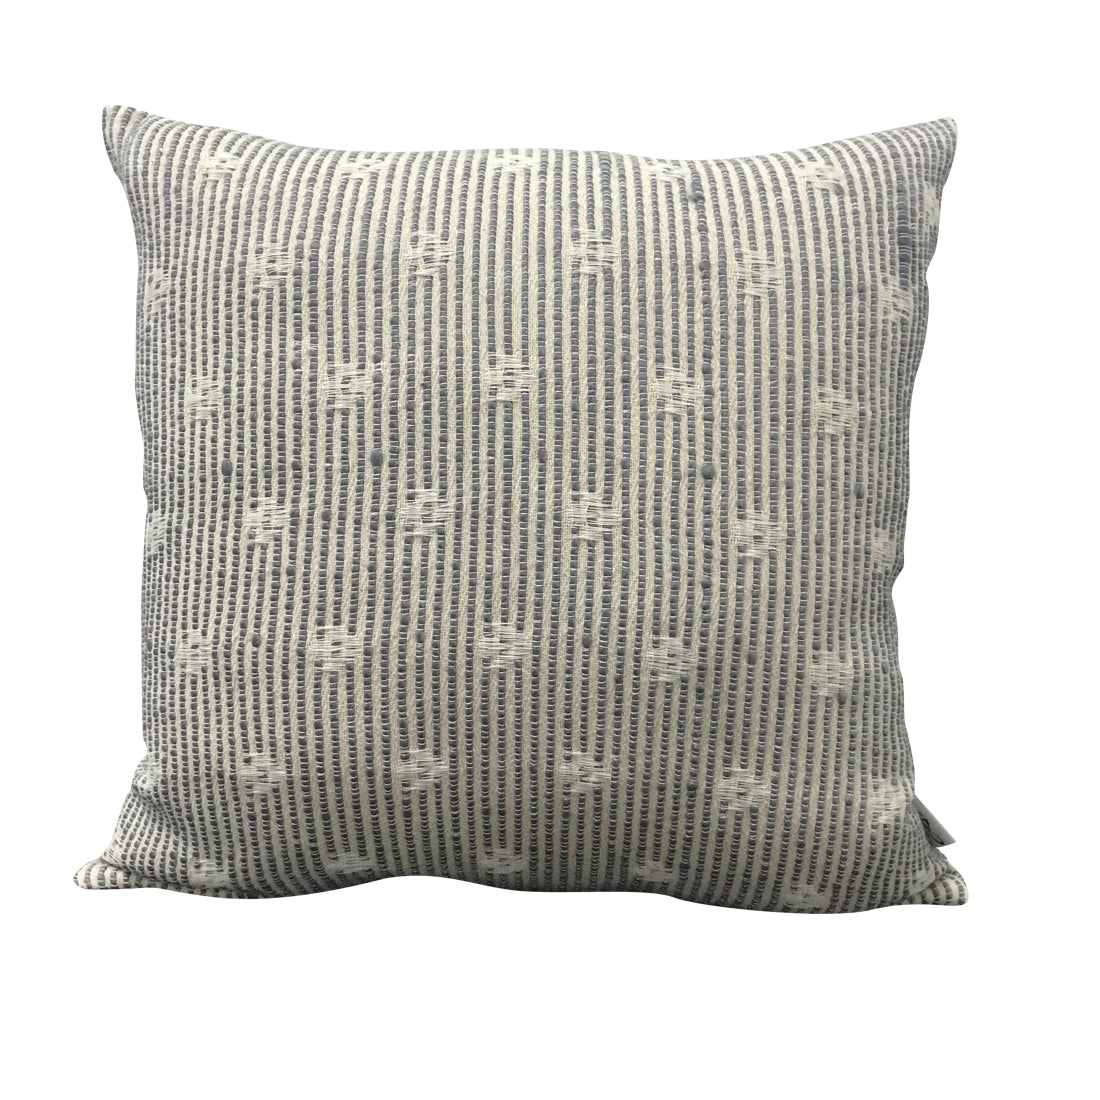 Ivory Hand Woven Sofa Cushion Cover 16x16